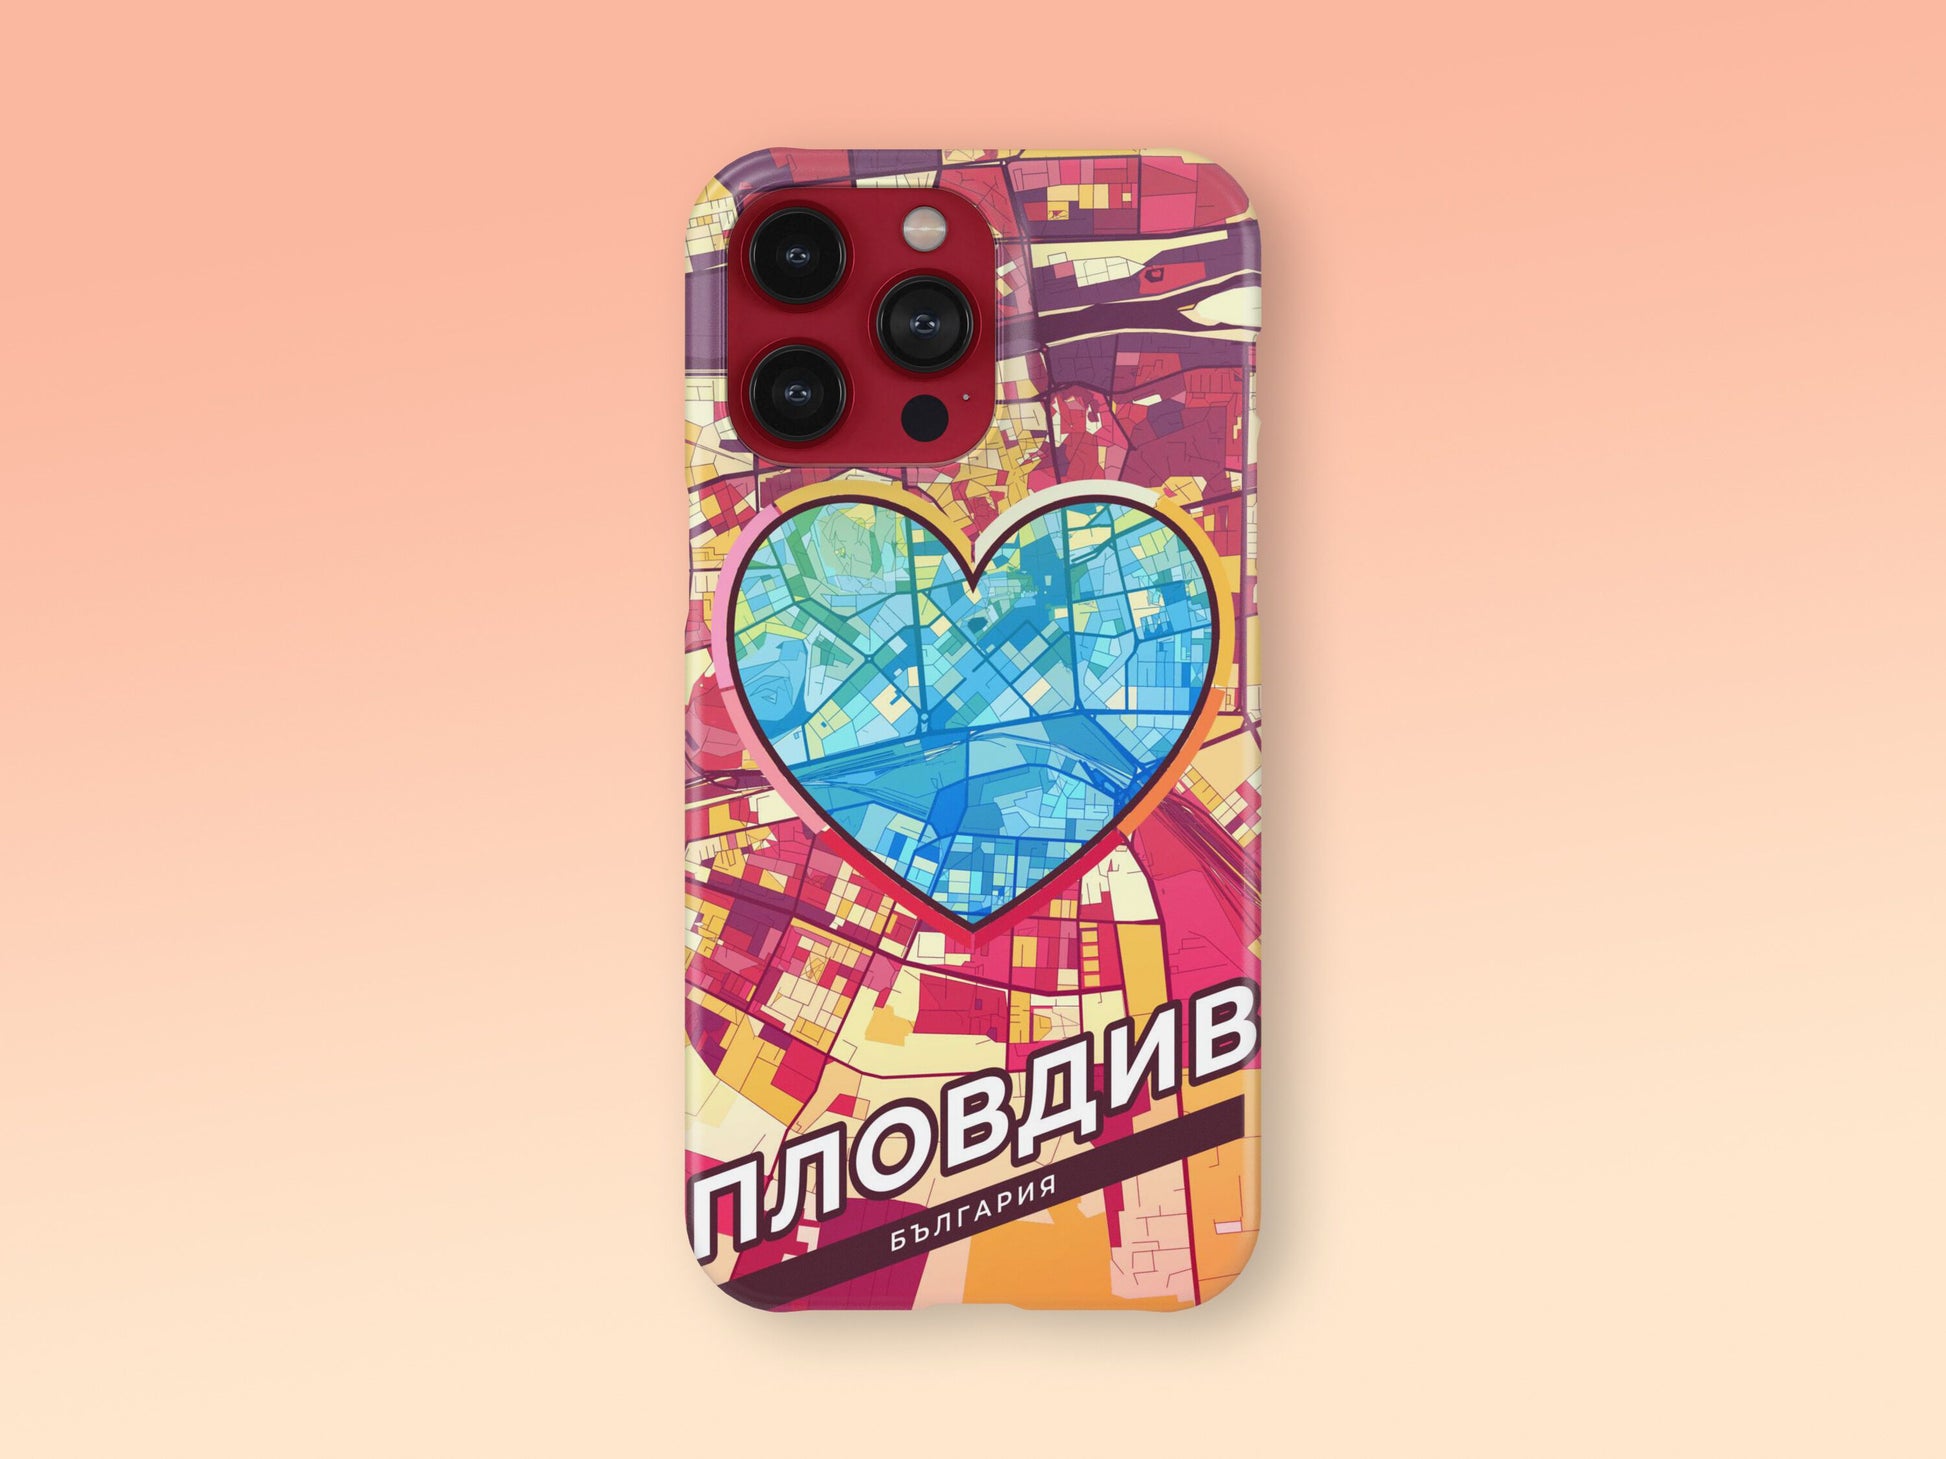 Пловдив България slim phone case with colorful icon 2